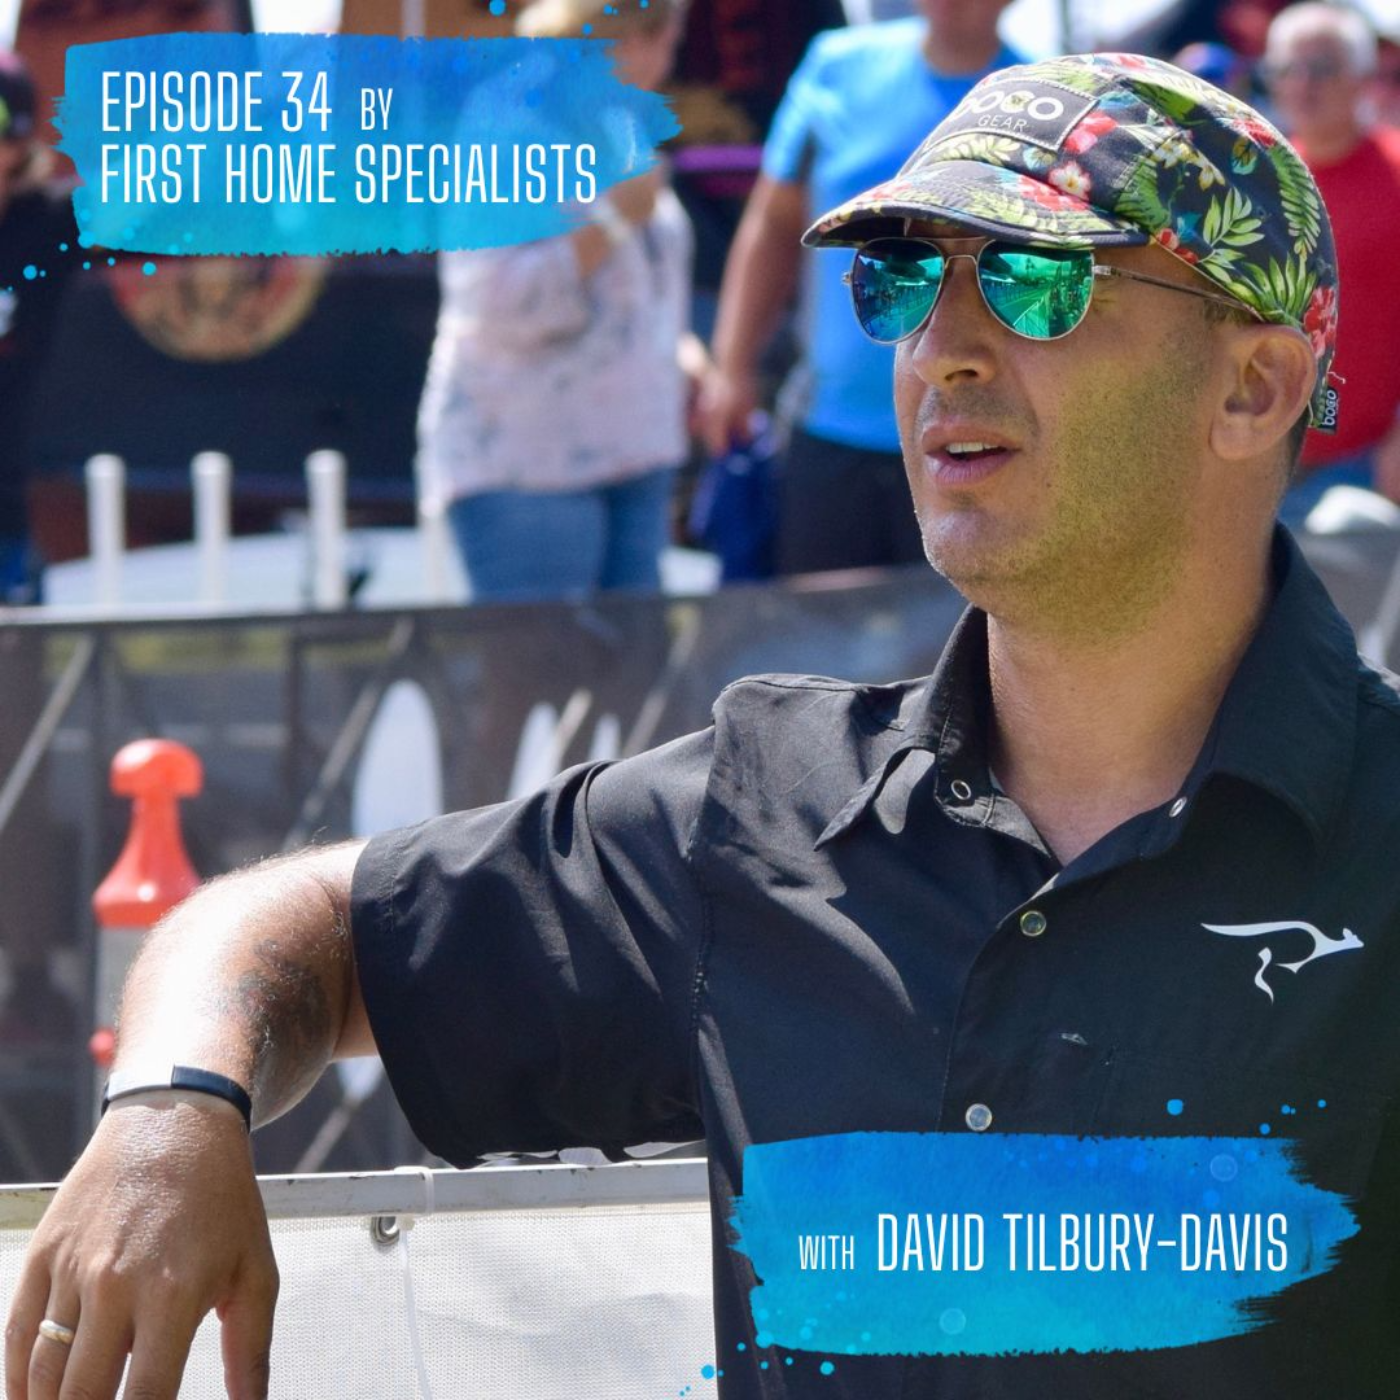 David Tilbury-Davis – Leading High-Performance Coach